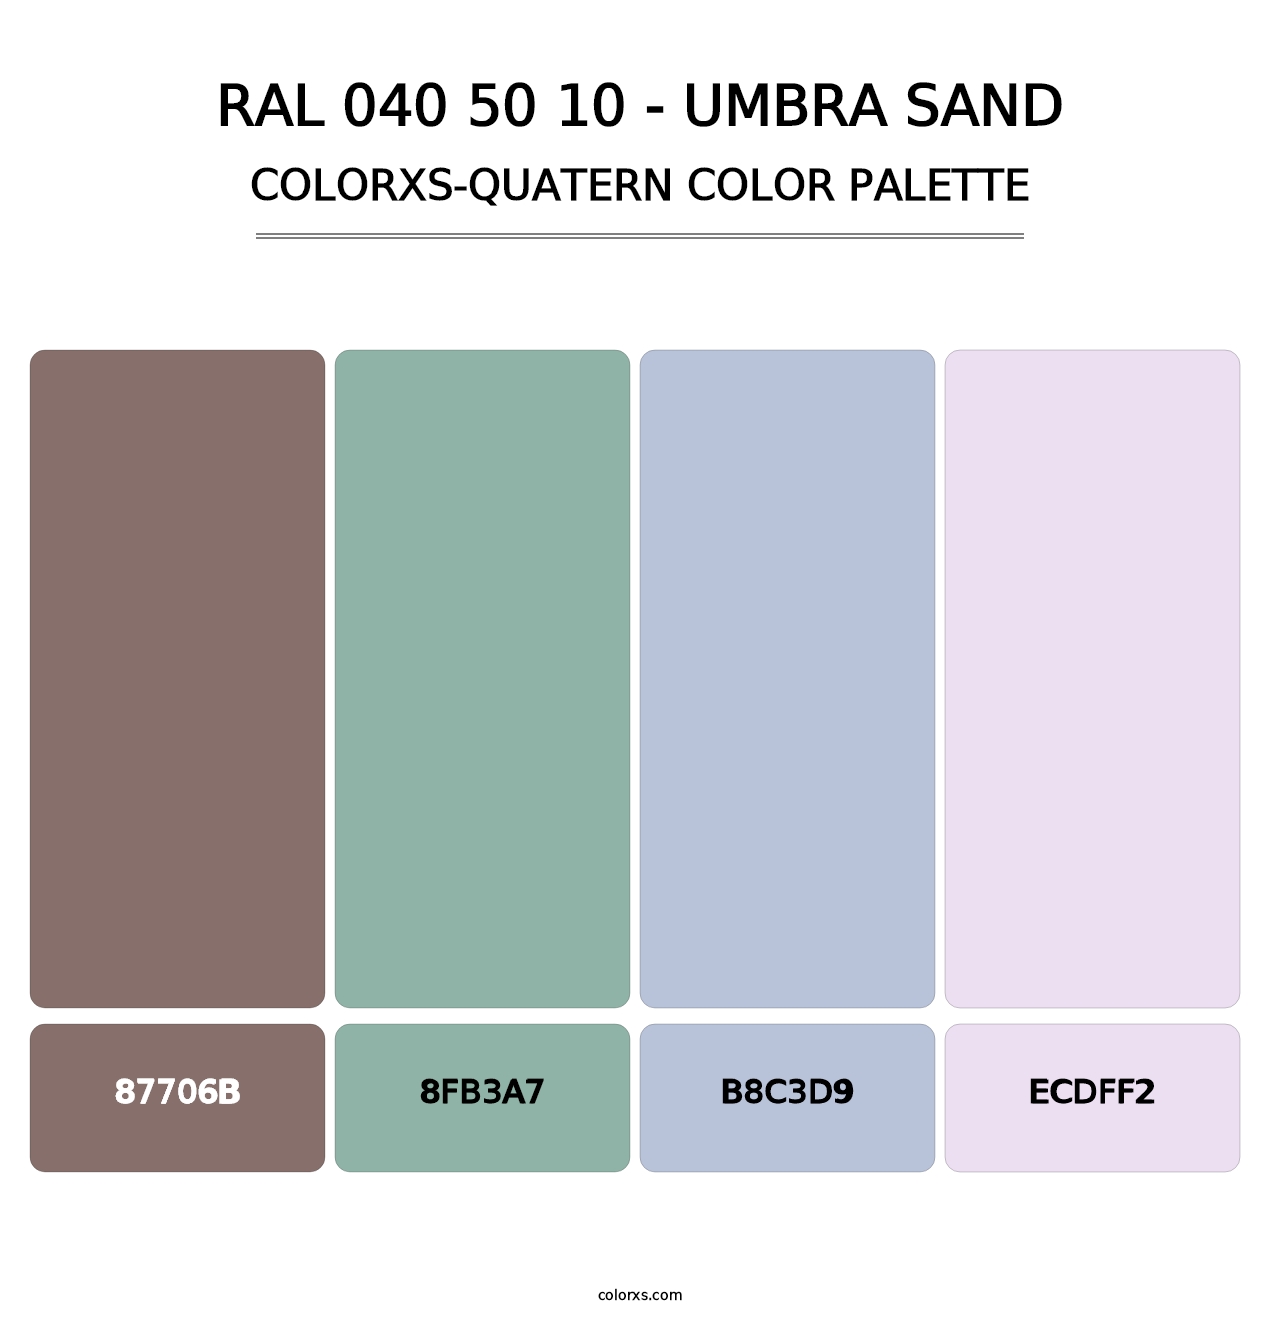 RAL 040 50 10 - Umbra Sand - Colorxs Quatern Palette